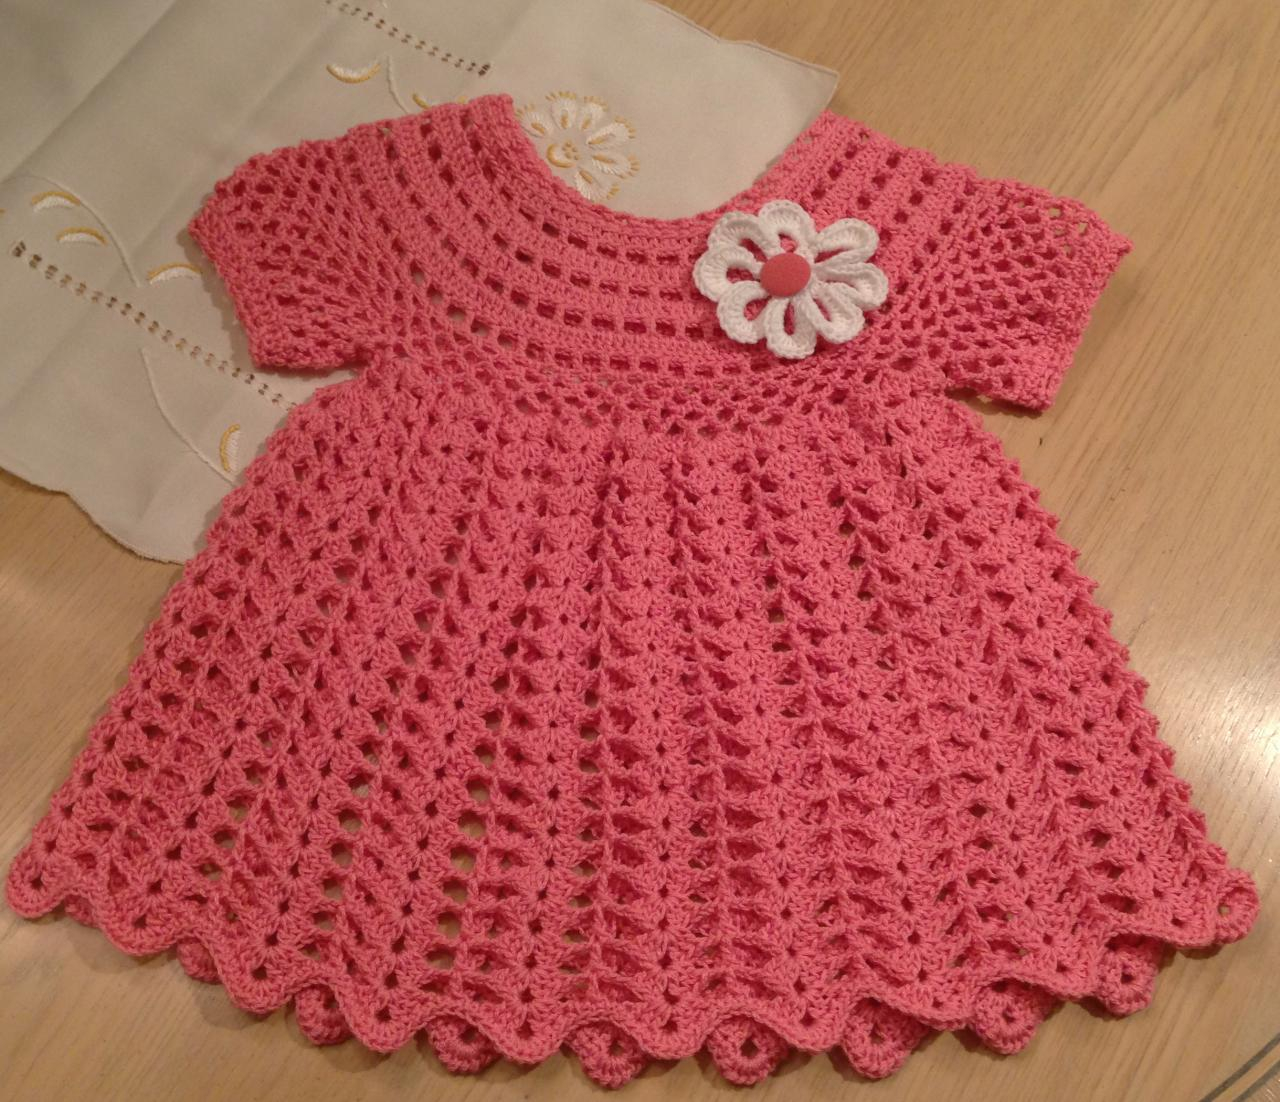 Crochet Baby Dress Free Pattern Peaches And Cream Dress Crochet Pattern Pdf12 097 On Luulla